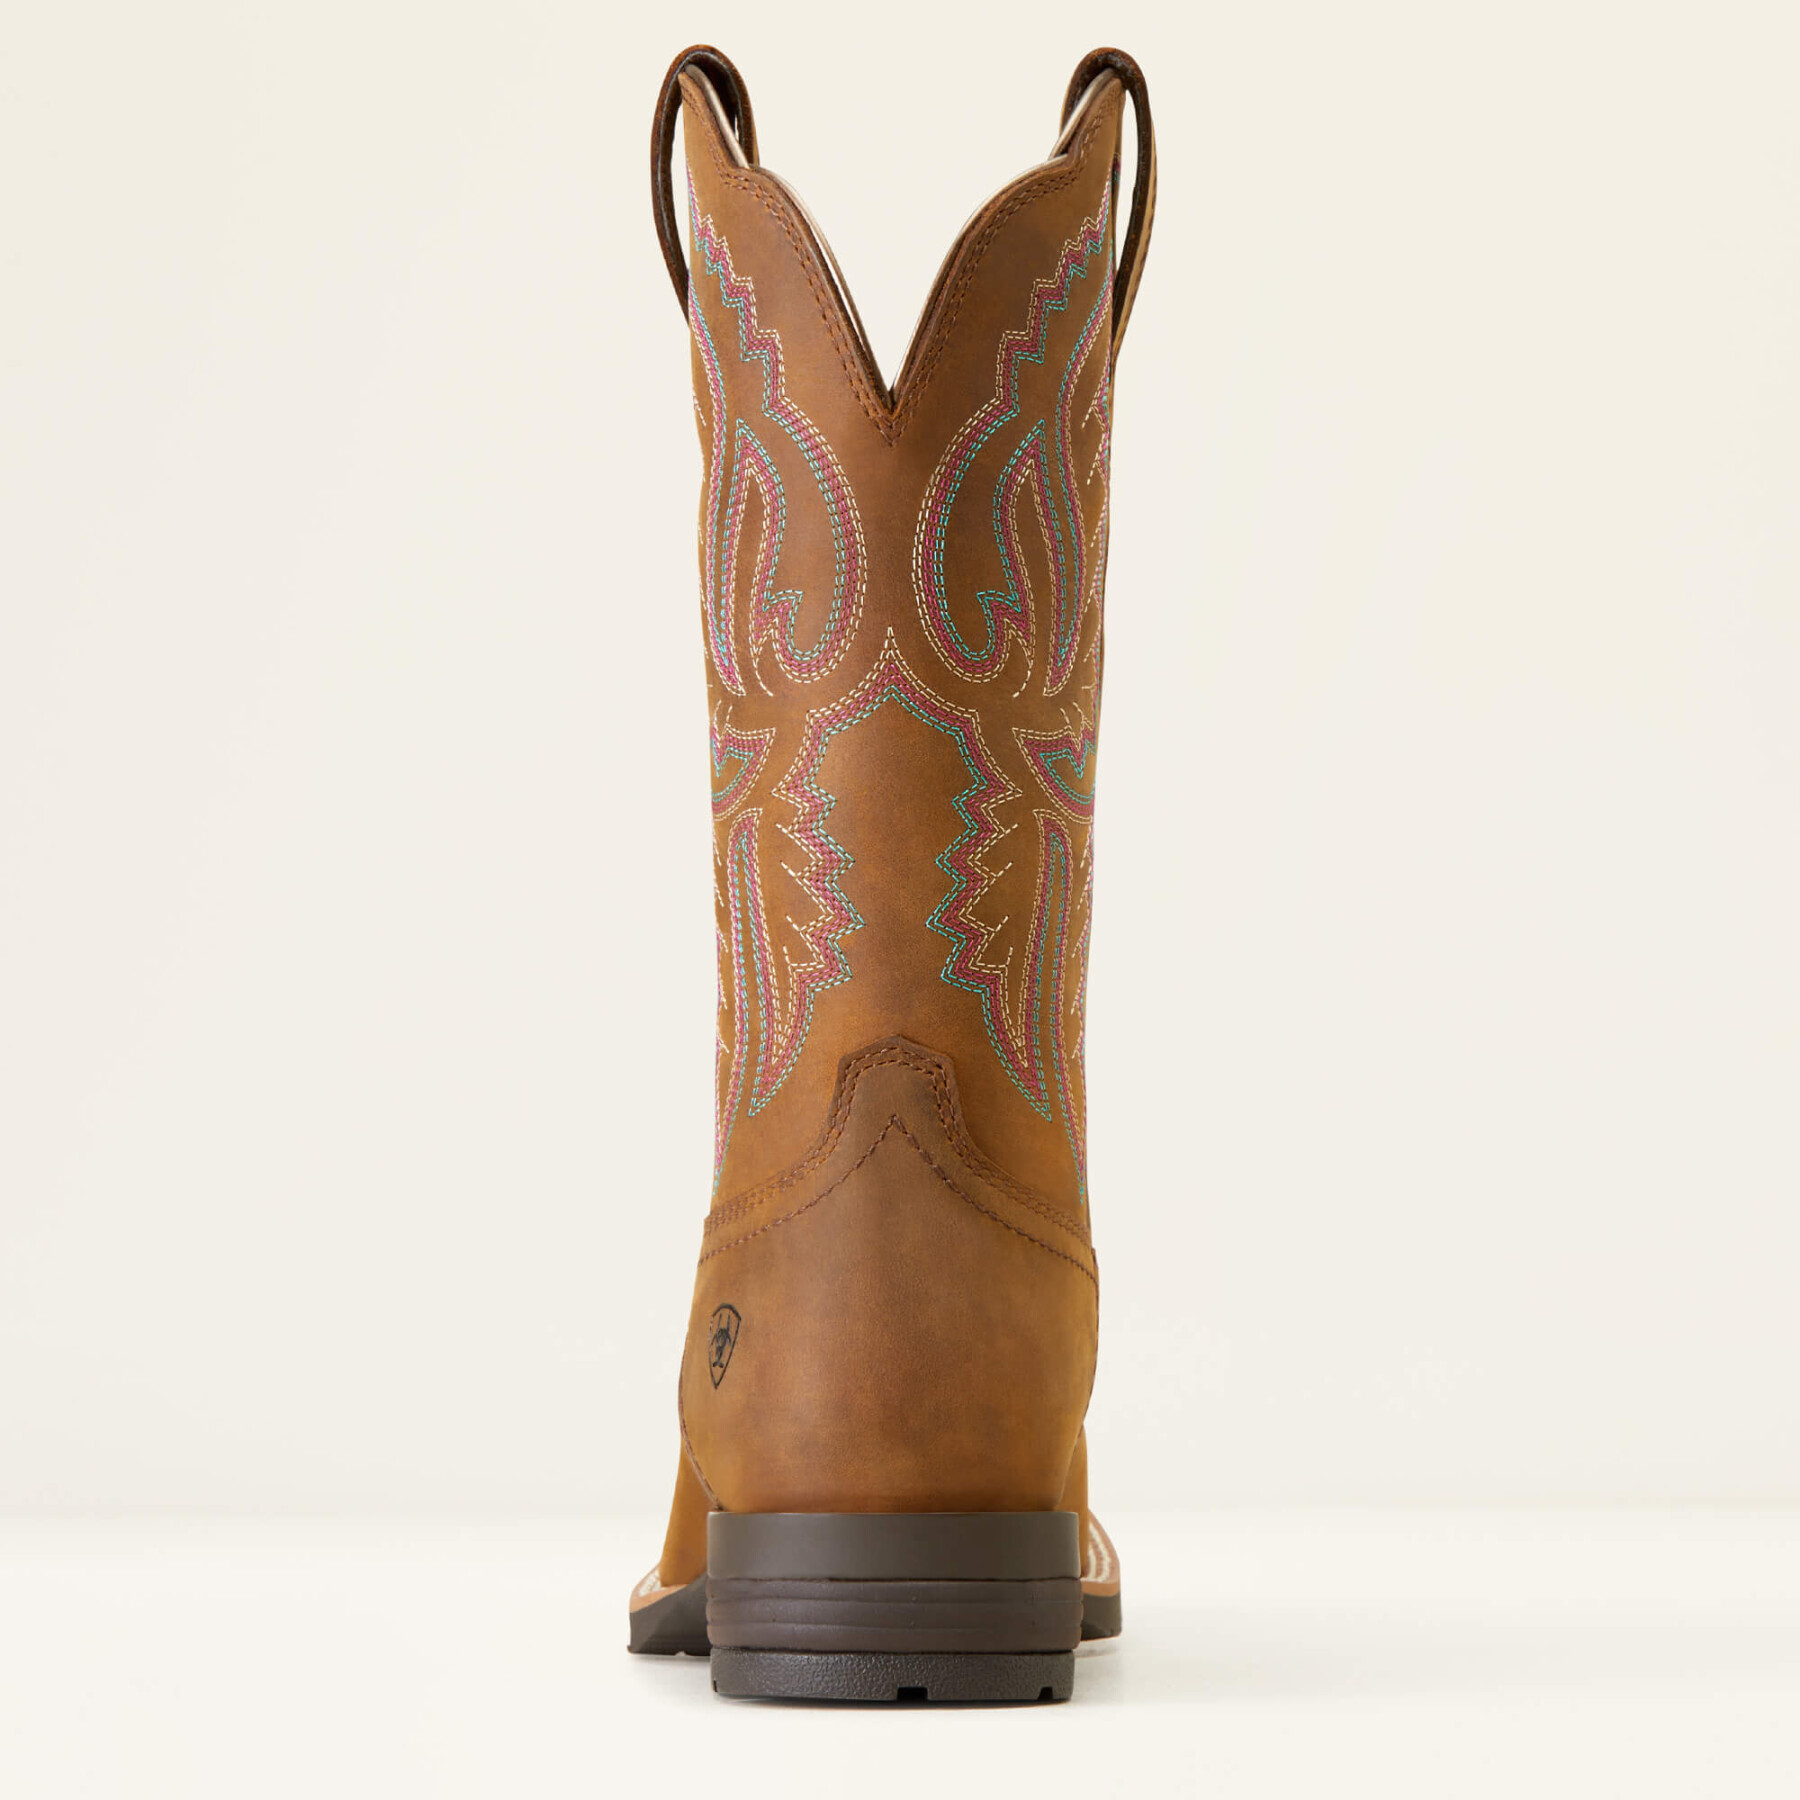 Women's hybrid leather western boots Ariat Ranchwork